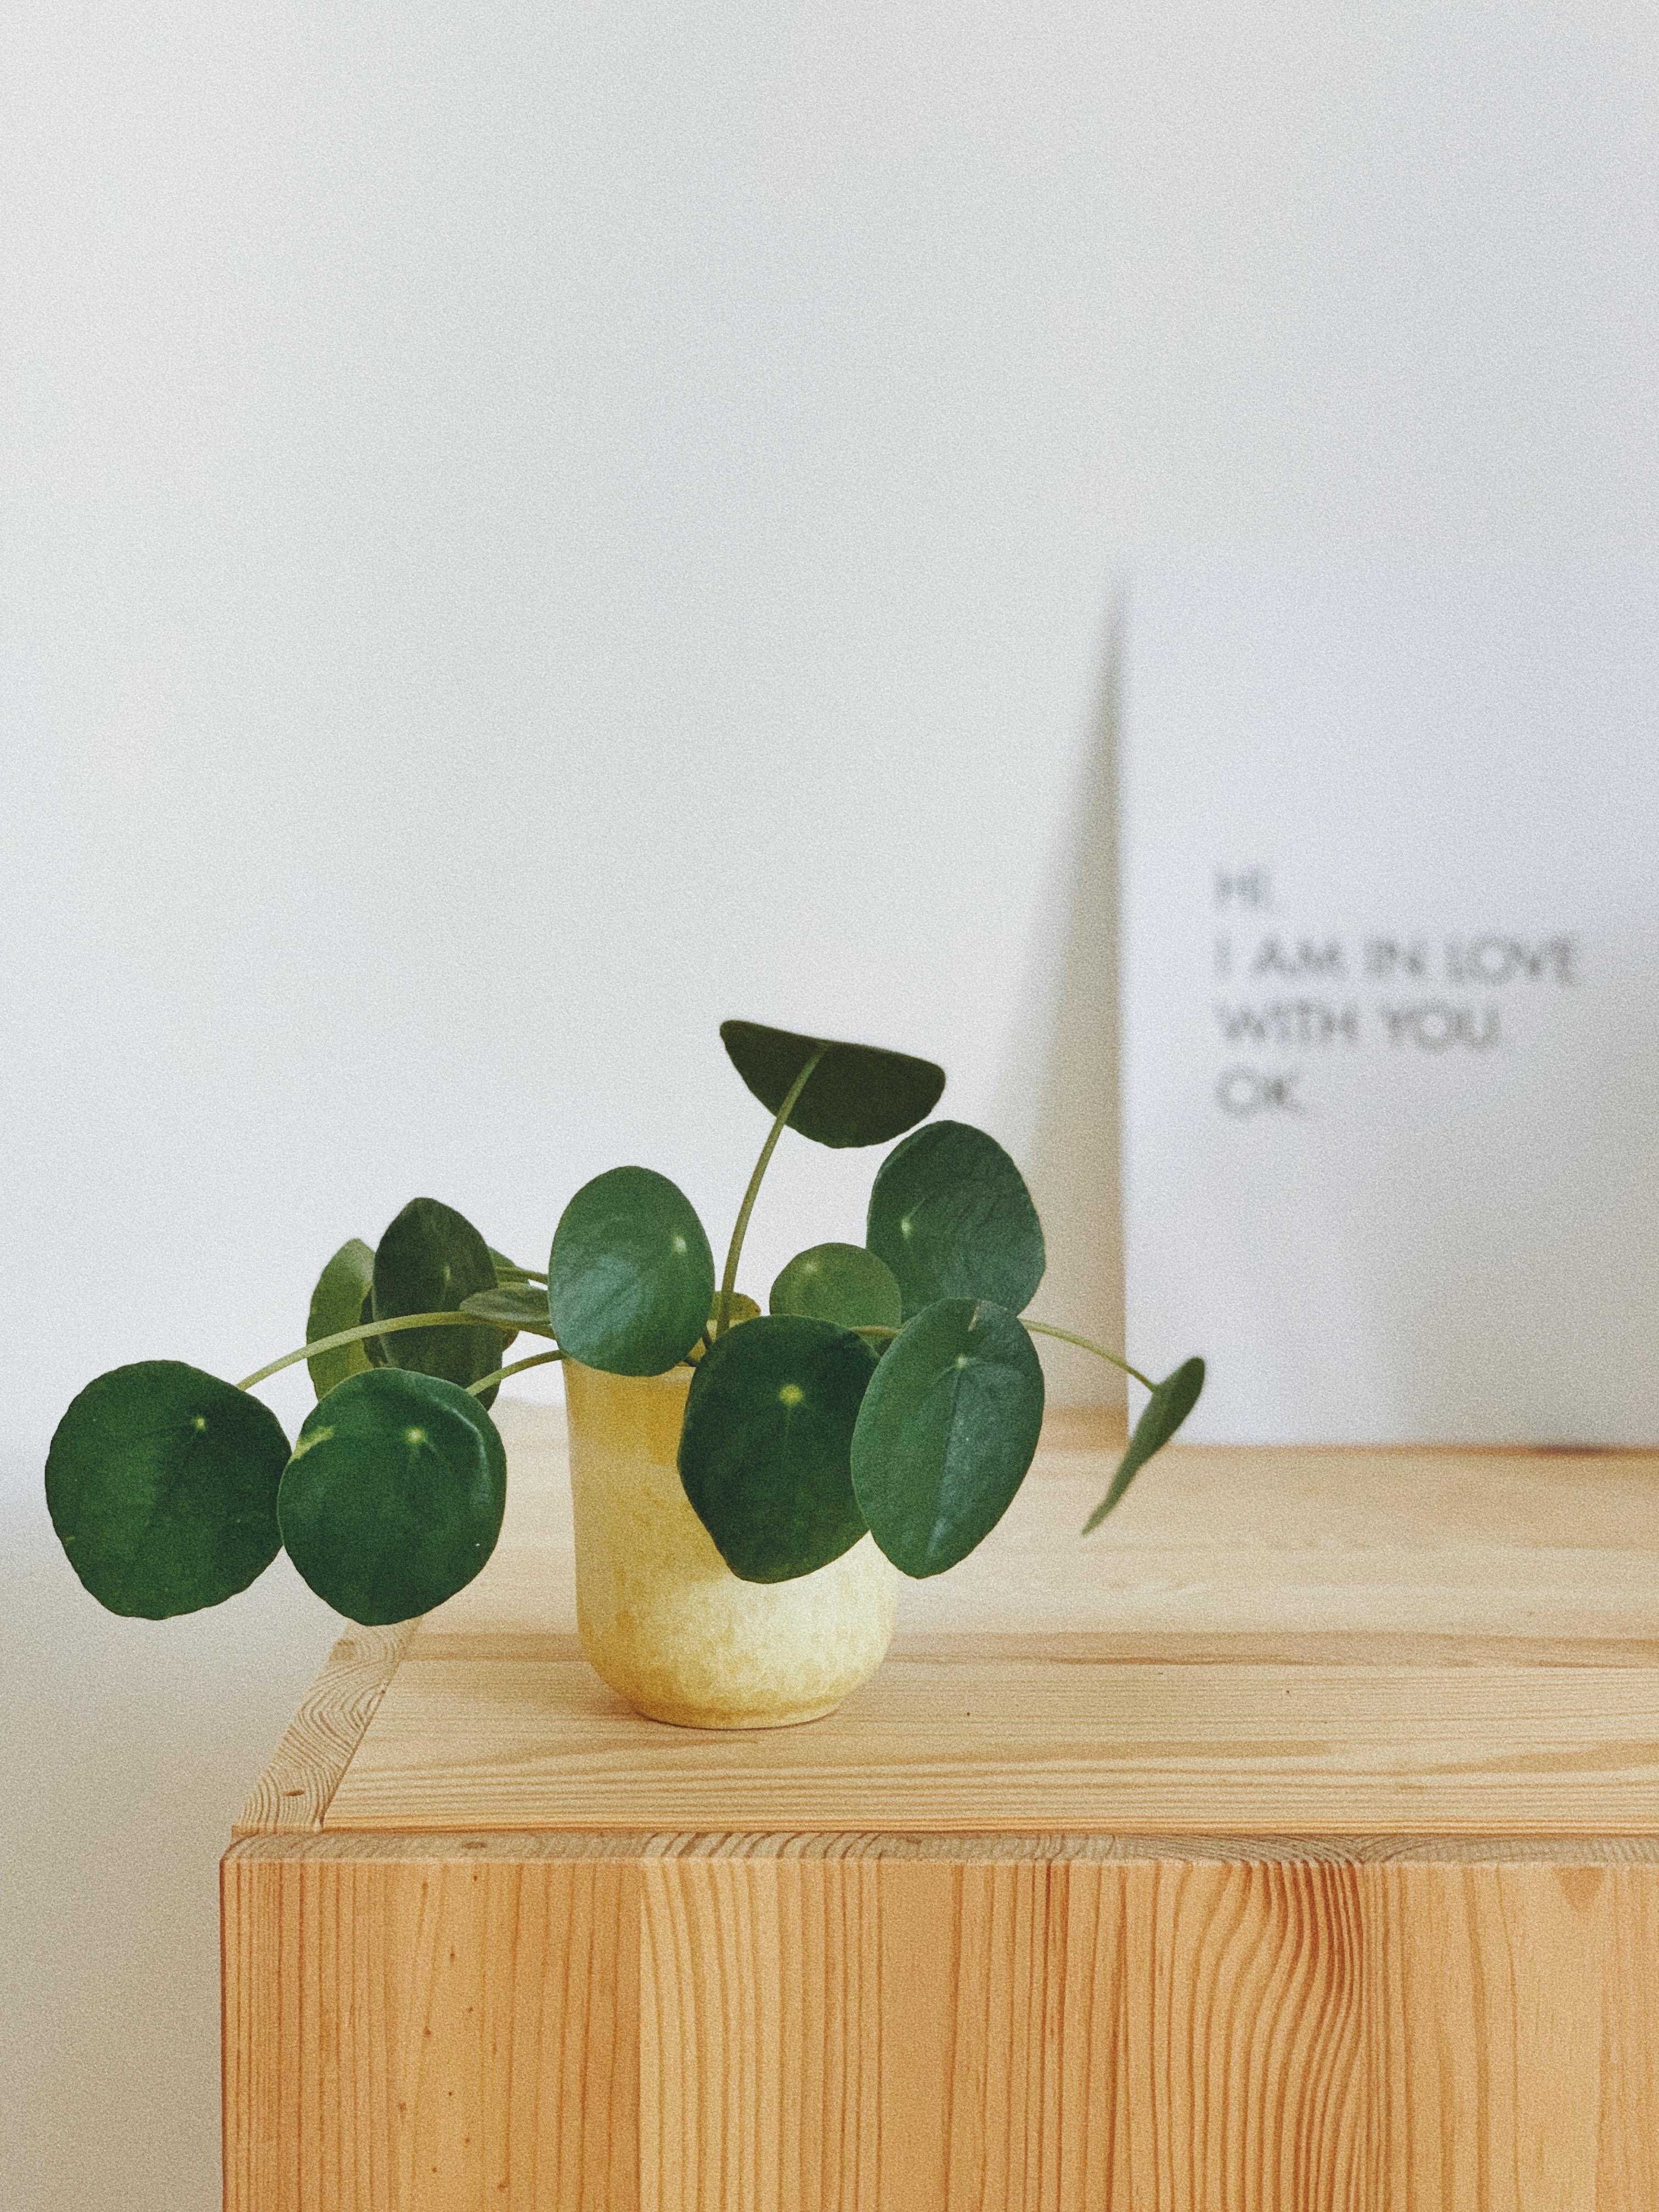 Pflanzenliebe. #interior #plants #green #ikea #ivar #beedroom
#decoration